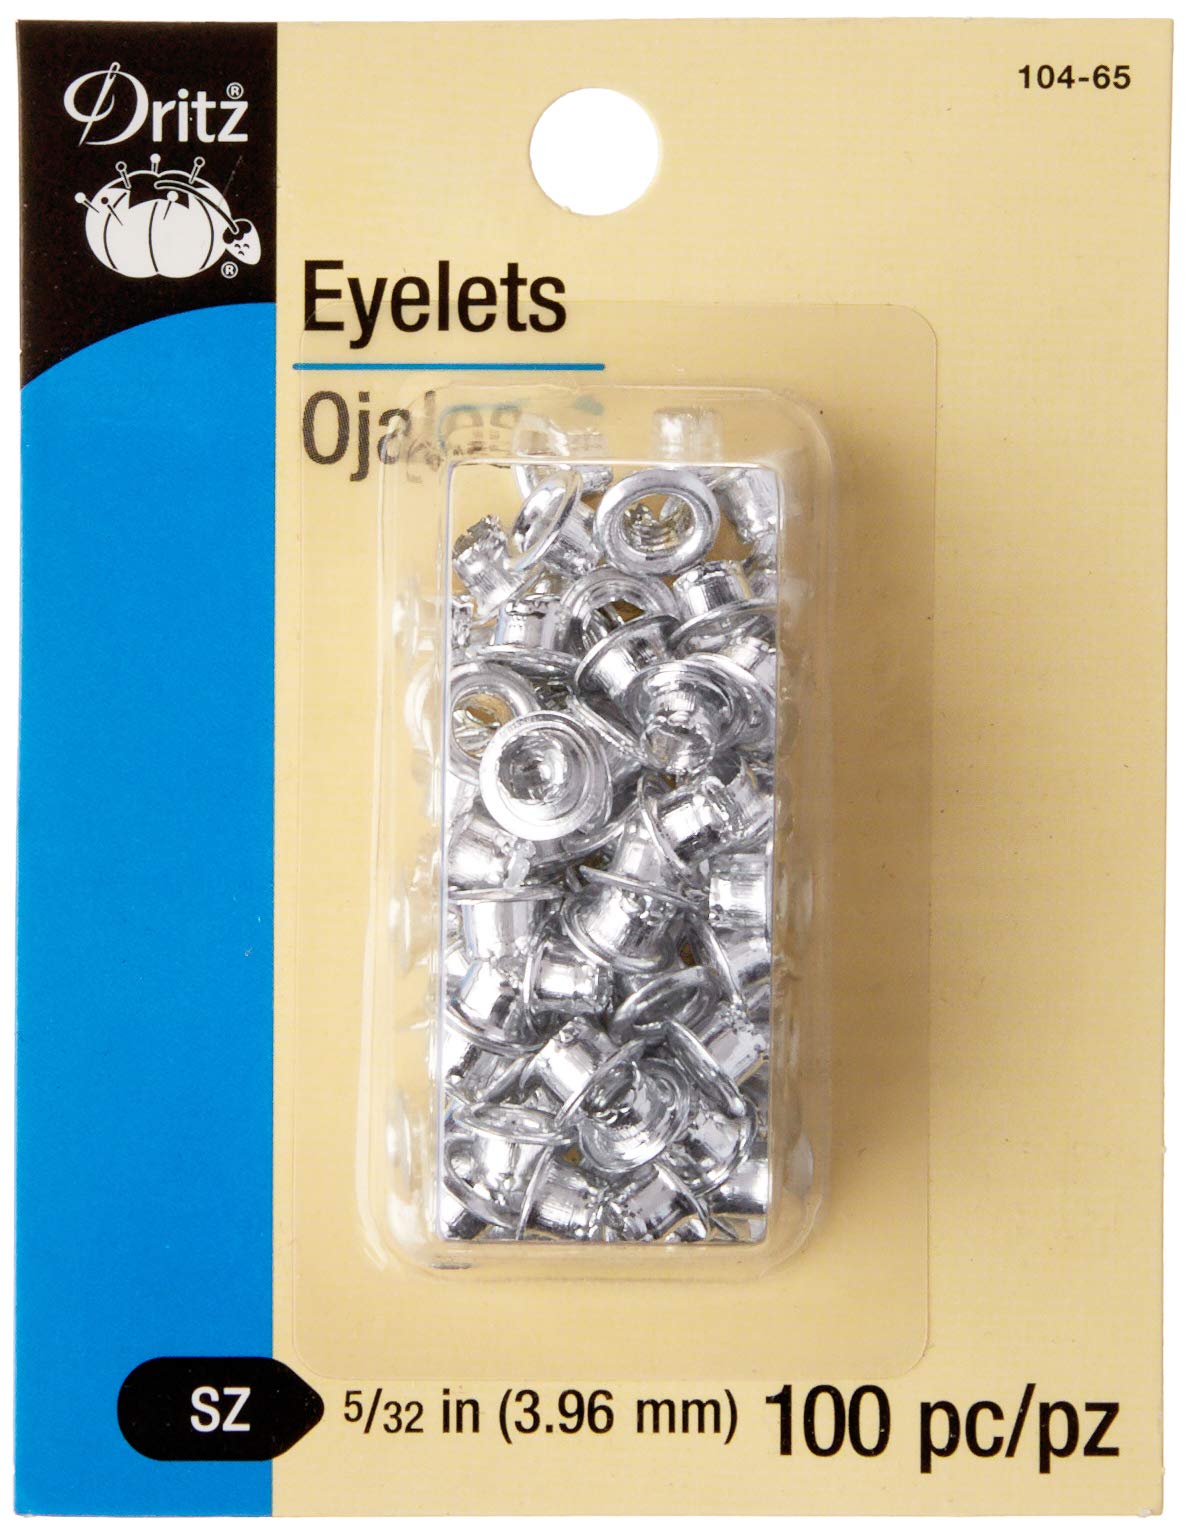 Dritz 7/16 Extra-large Eyelet Kit 10 Eyelet Sets With Tools Brass : Target